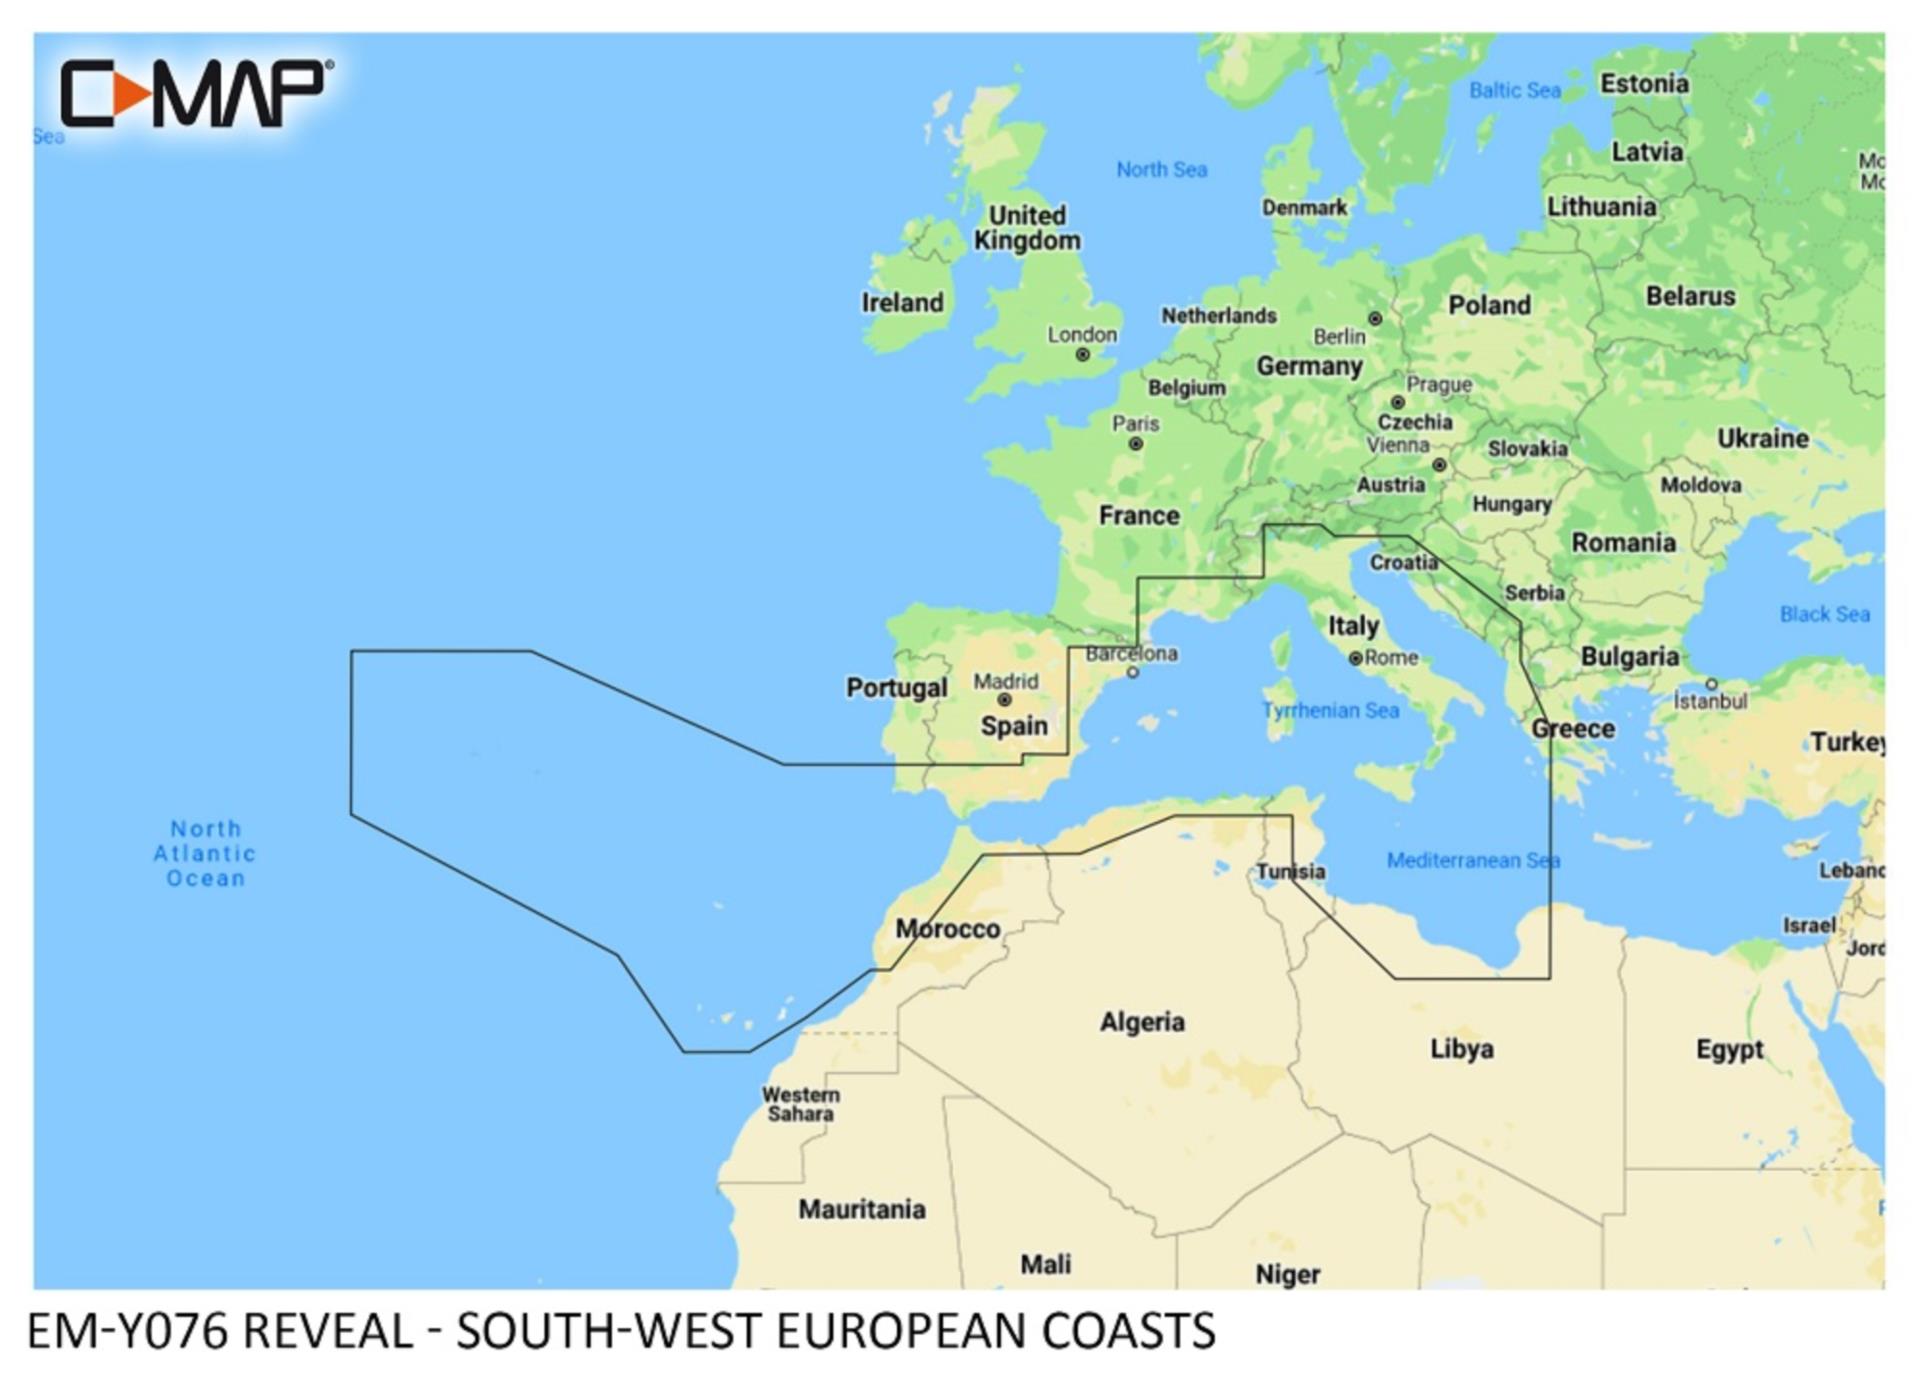 C-MAP Reveal L South-West European Coasts